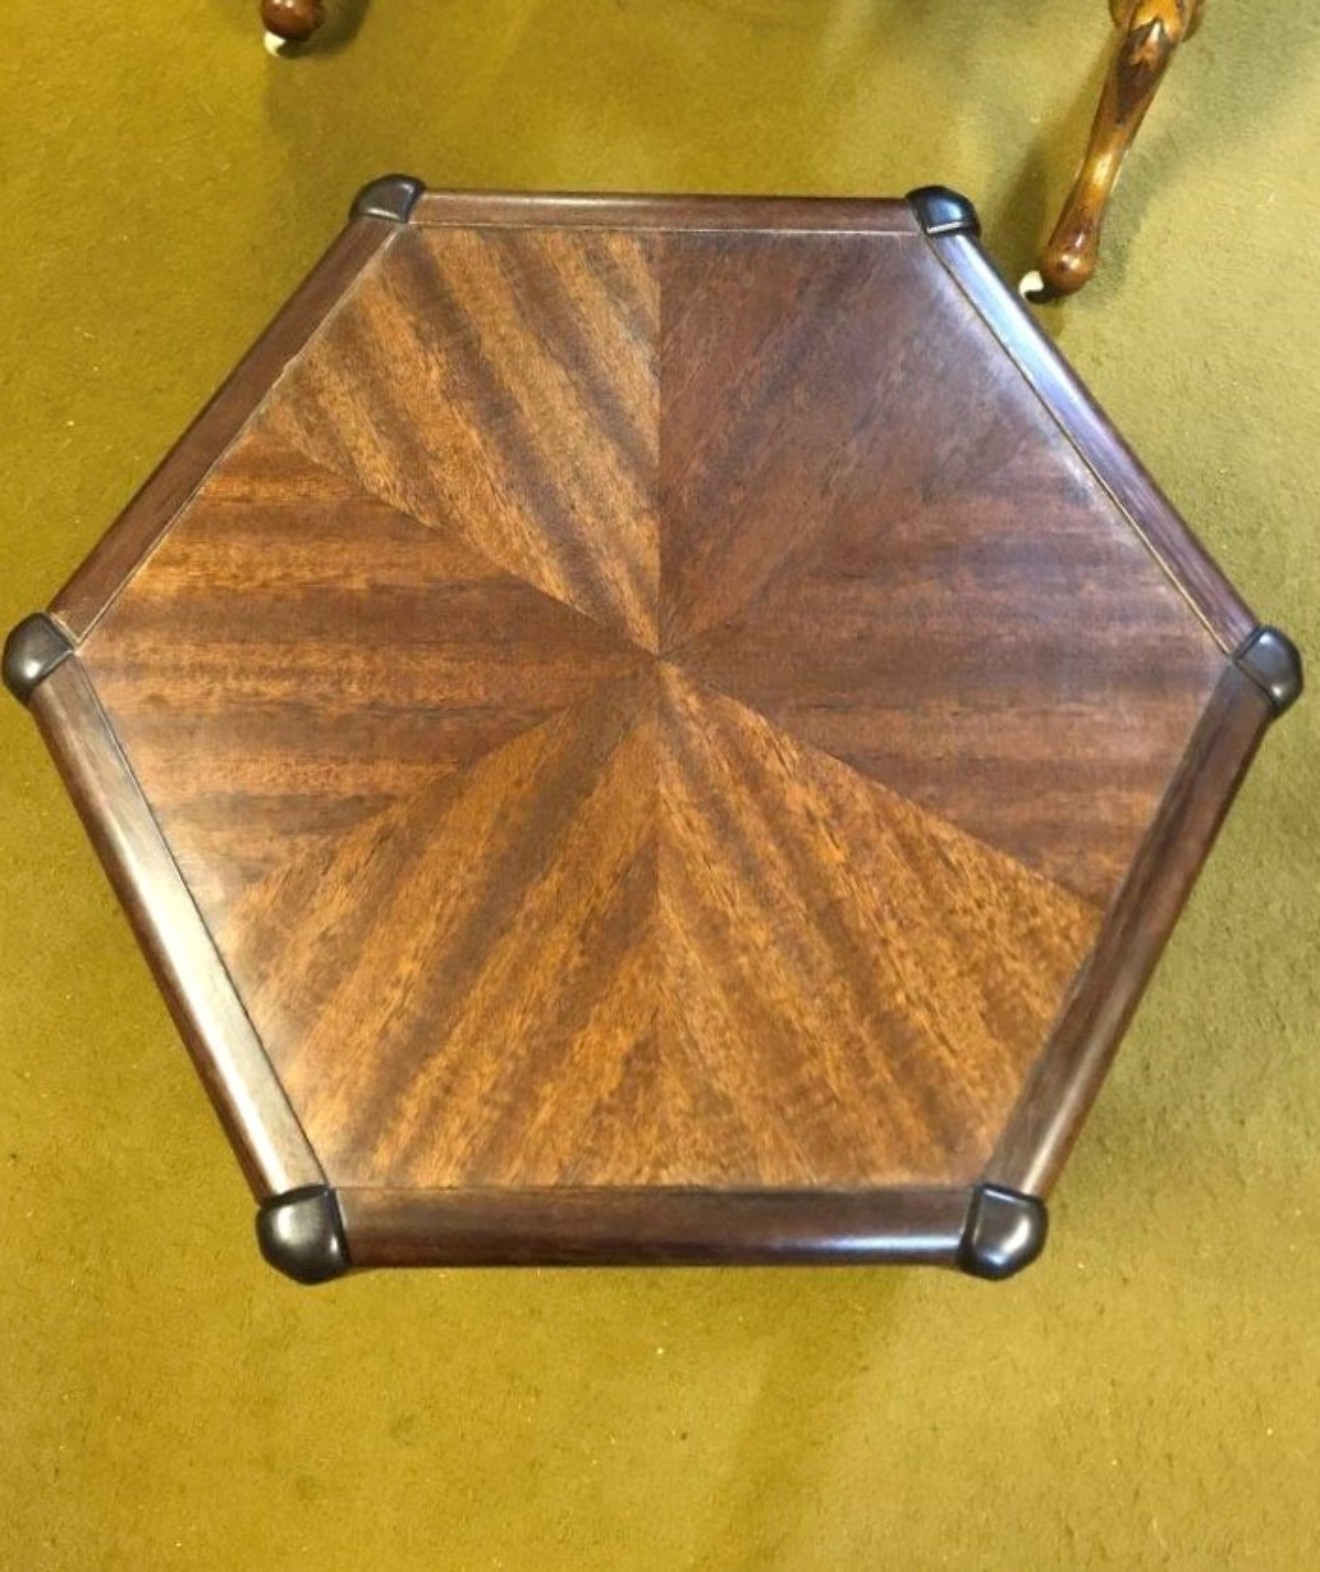 Vintage Teak Hexagonal Sunburst Occasional Table